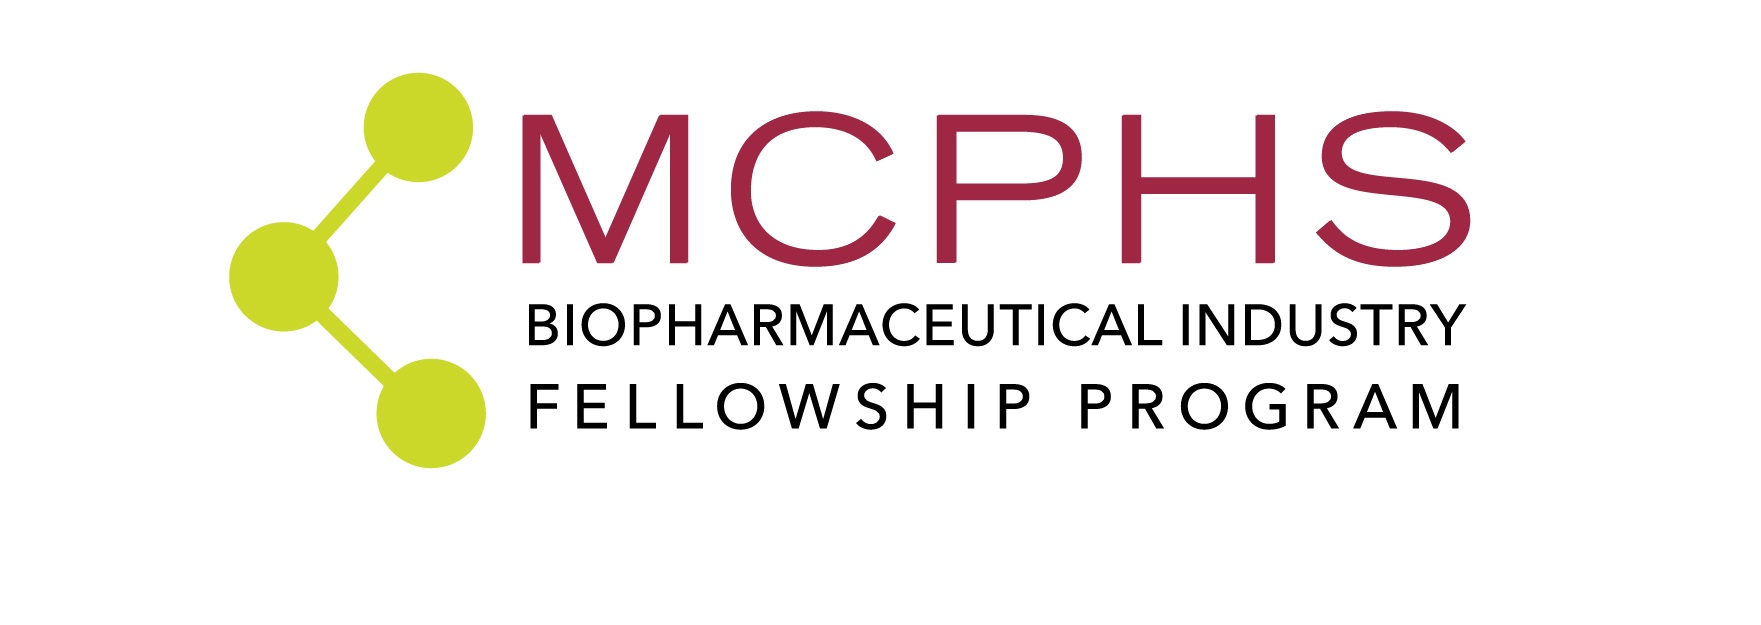 MCPHS Biopharmaceutical Industry Fellowship Program logo